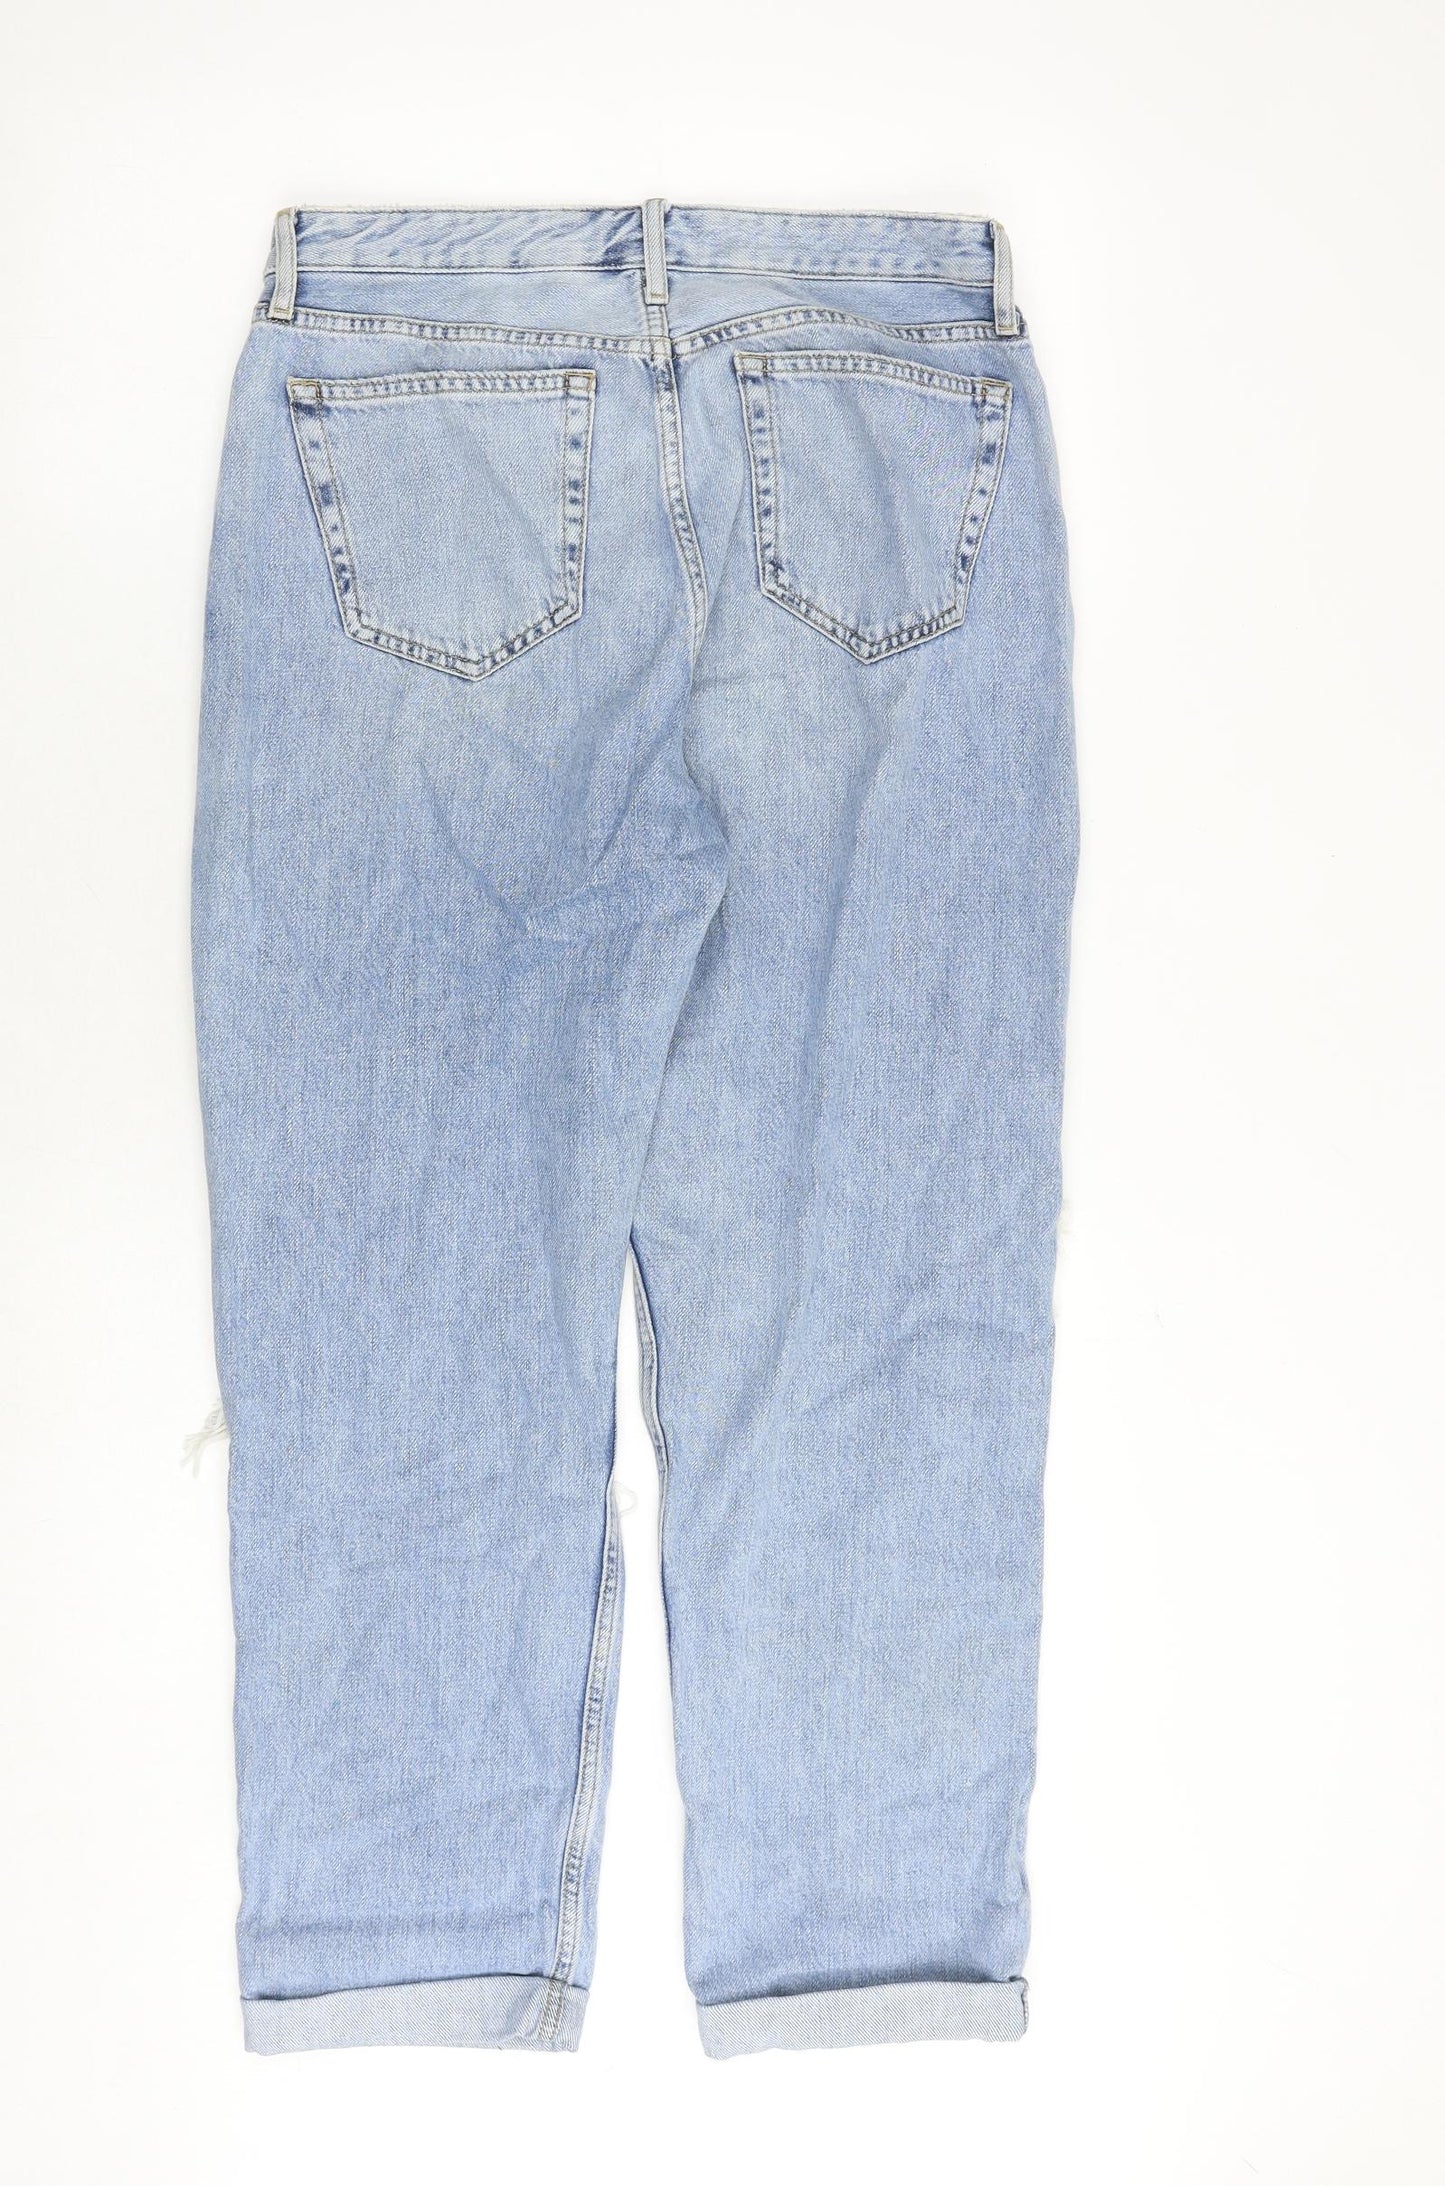 Topshop Womens Blue Cotton Mom Jeans Size 26 in Regular Zip - Open Knee